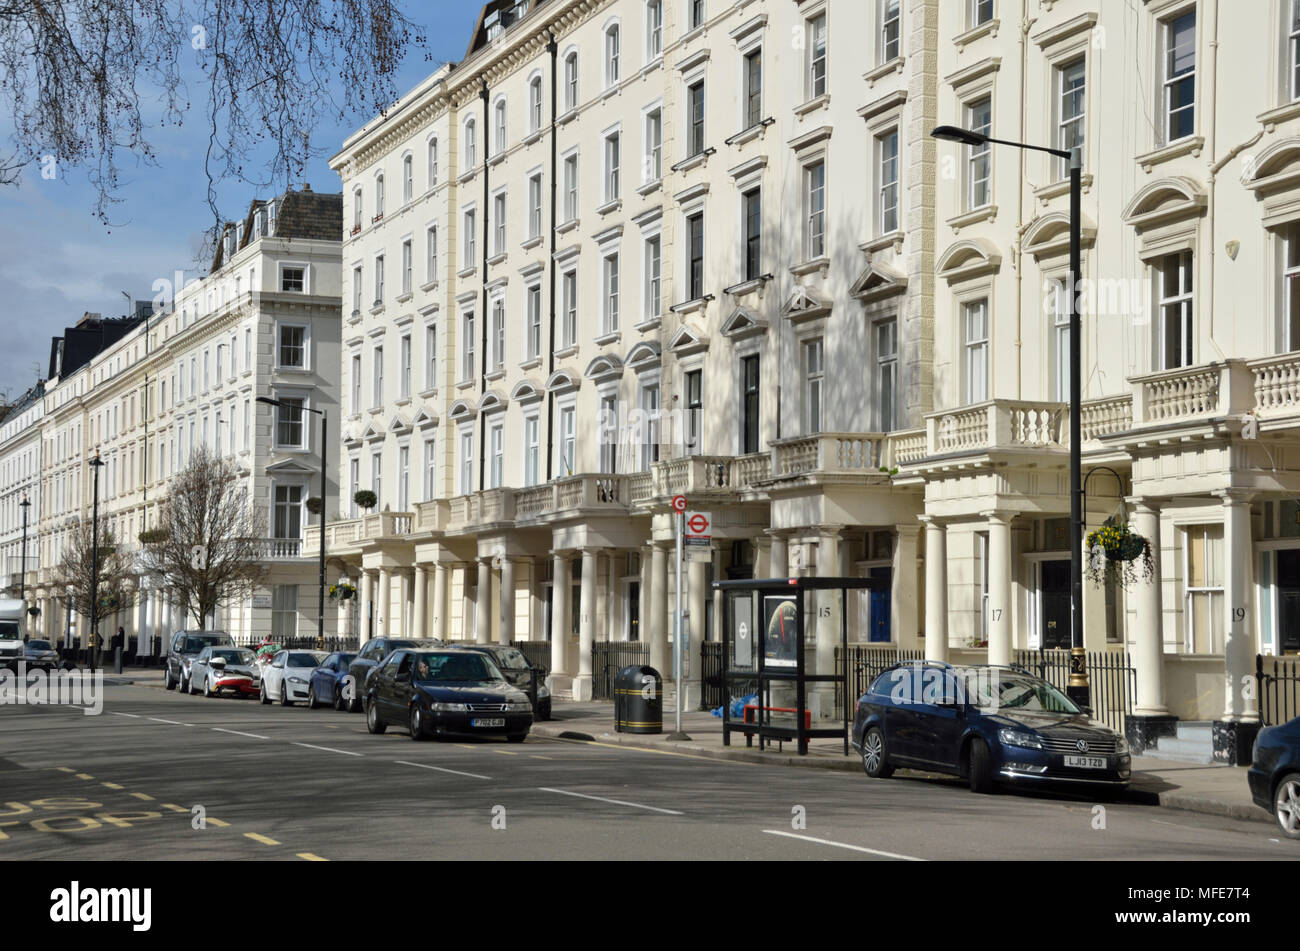 St George's Square SW1, Pimlico, London, UK. Stockfoto